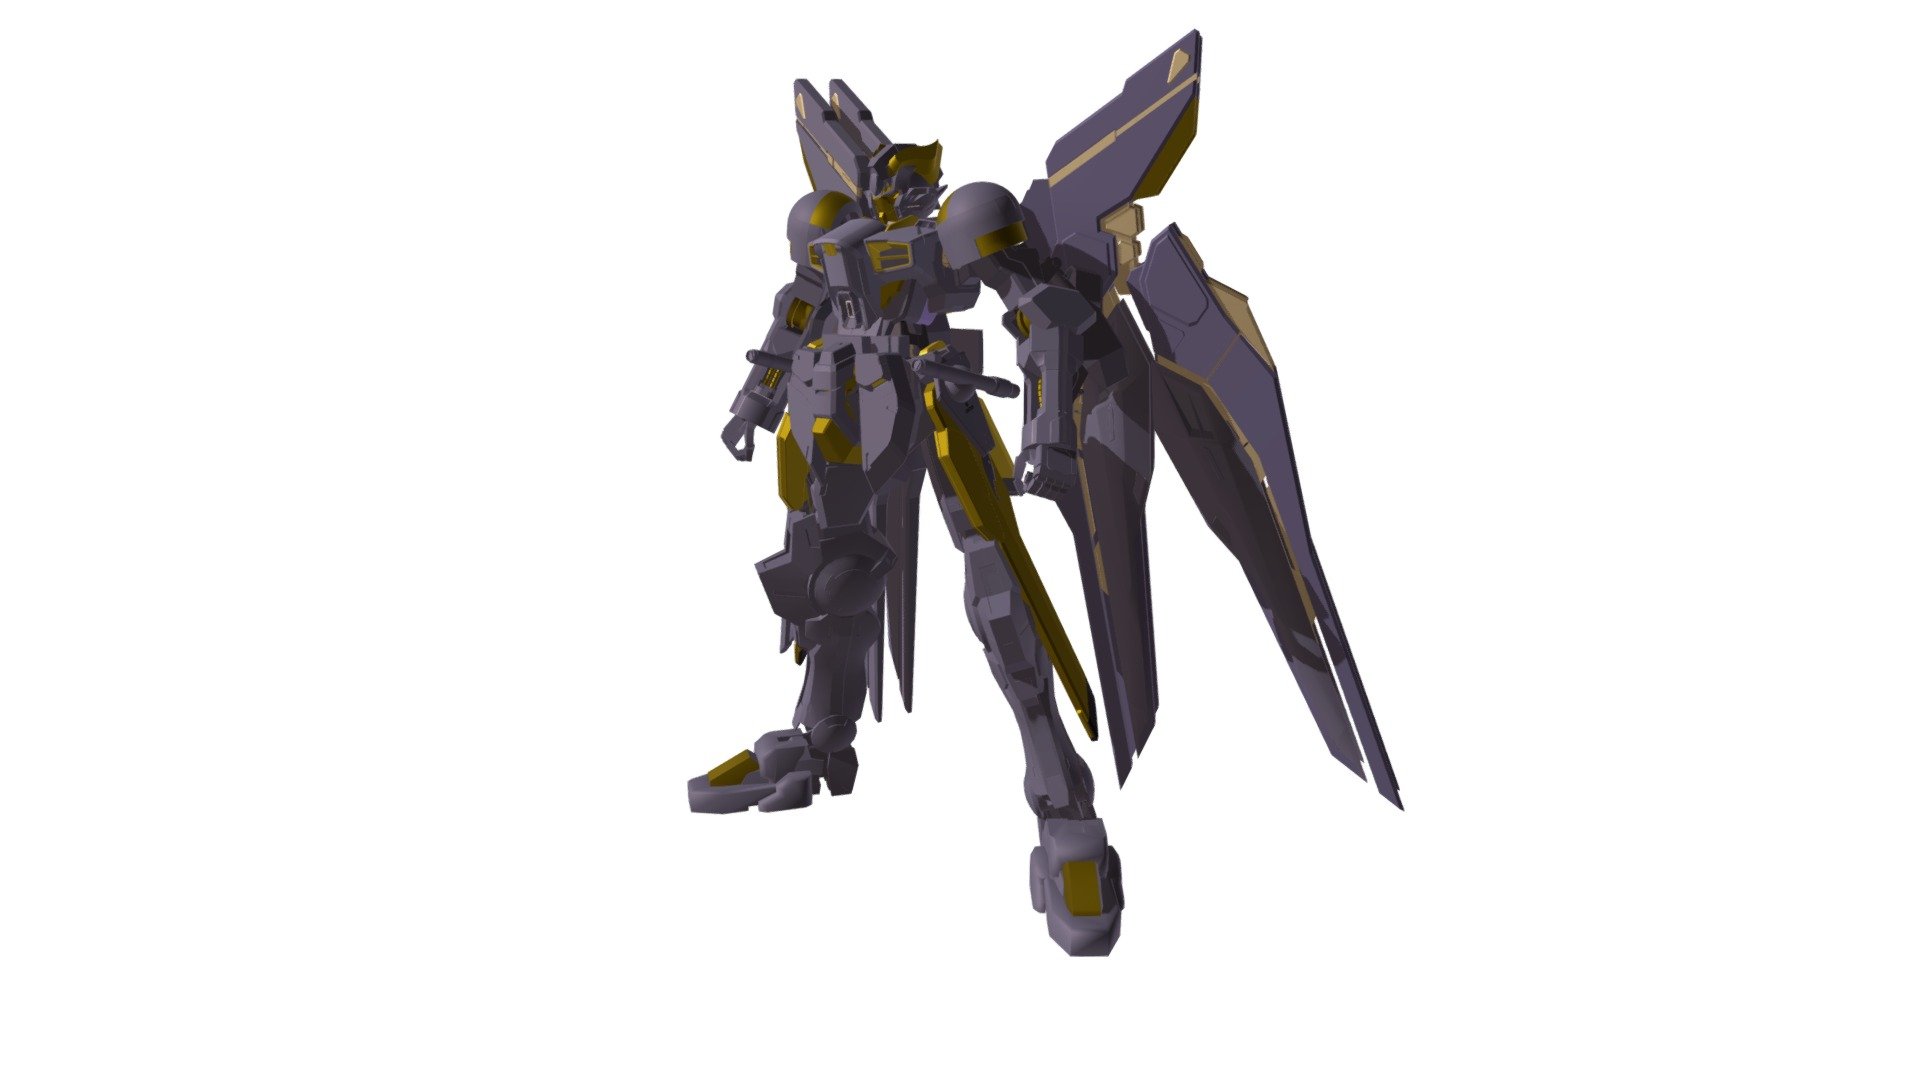 Mixer Gundam Thailand Sema PRoject - Gundam Sema BlacK SATAN - 3D model by krit yamsaso (กฤษณ์ แย้มสระโส) (@krit_yamsaso) 3d model